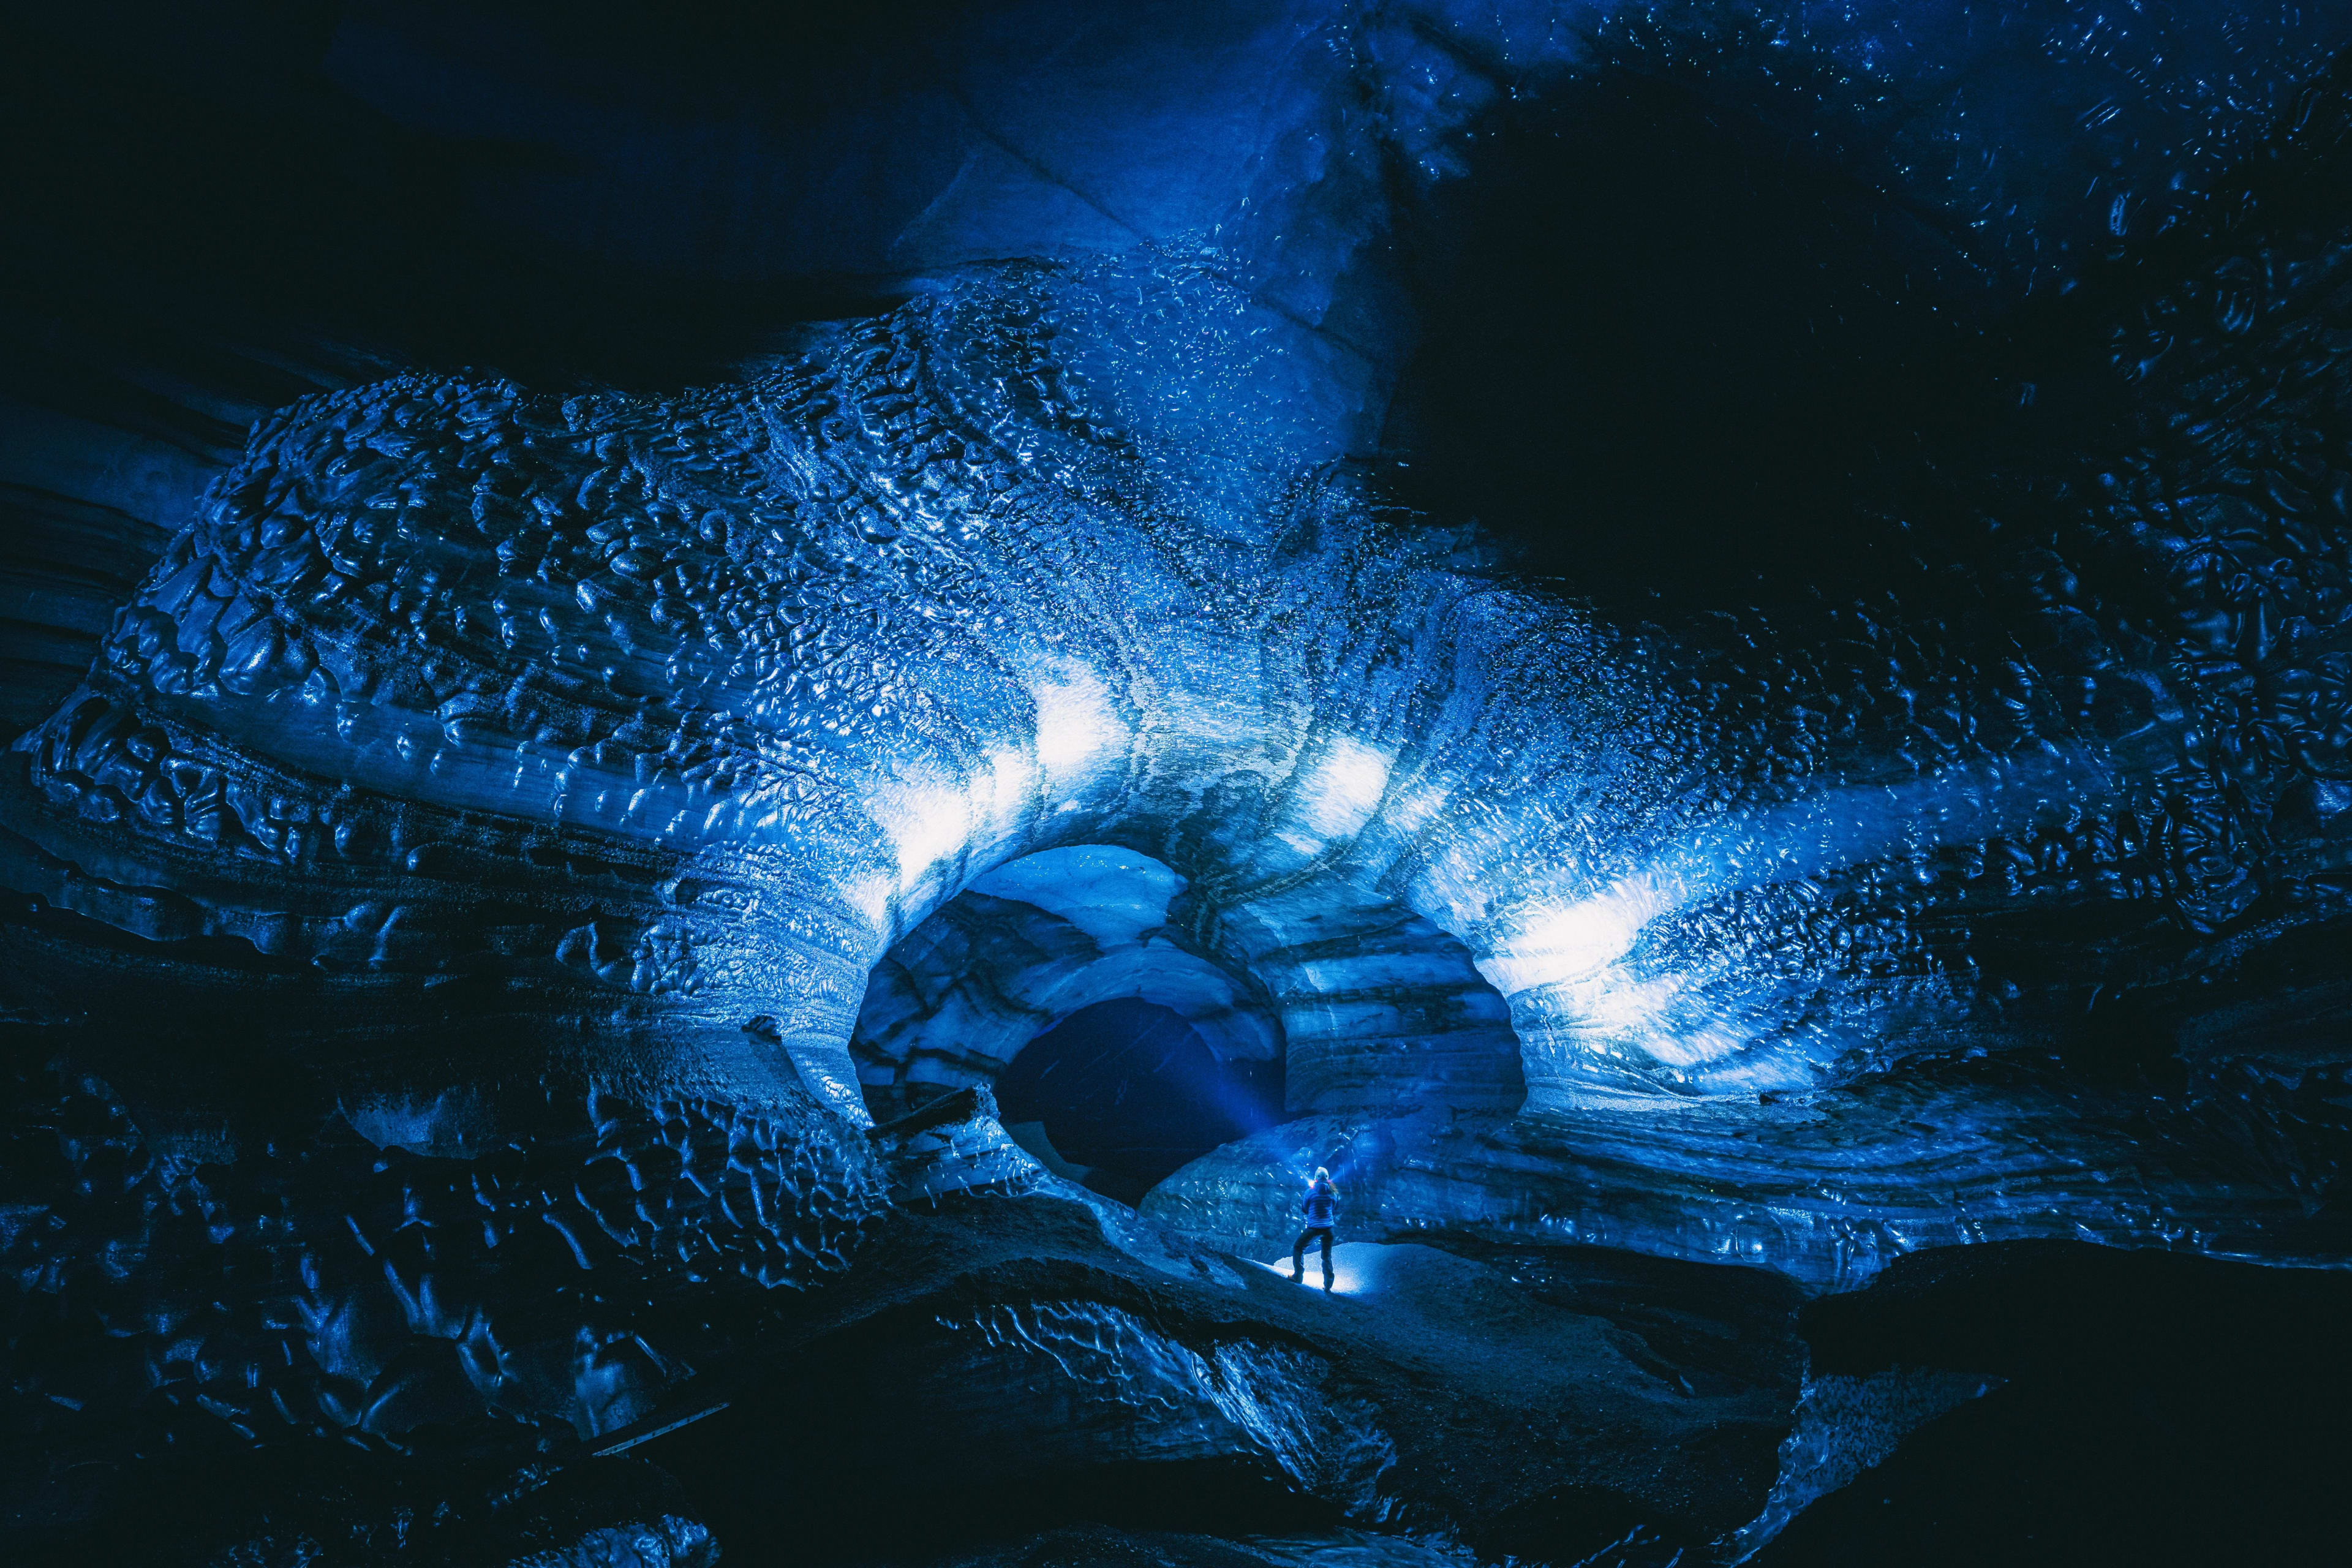 katla ice cave with blue light